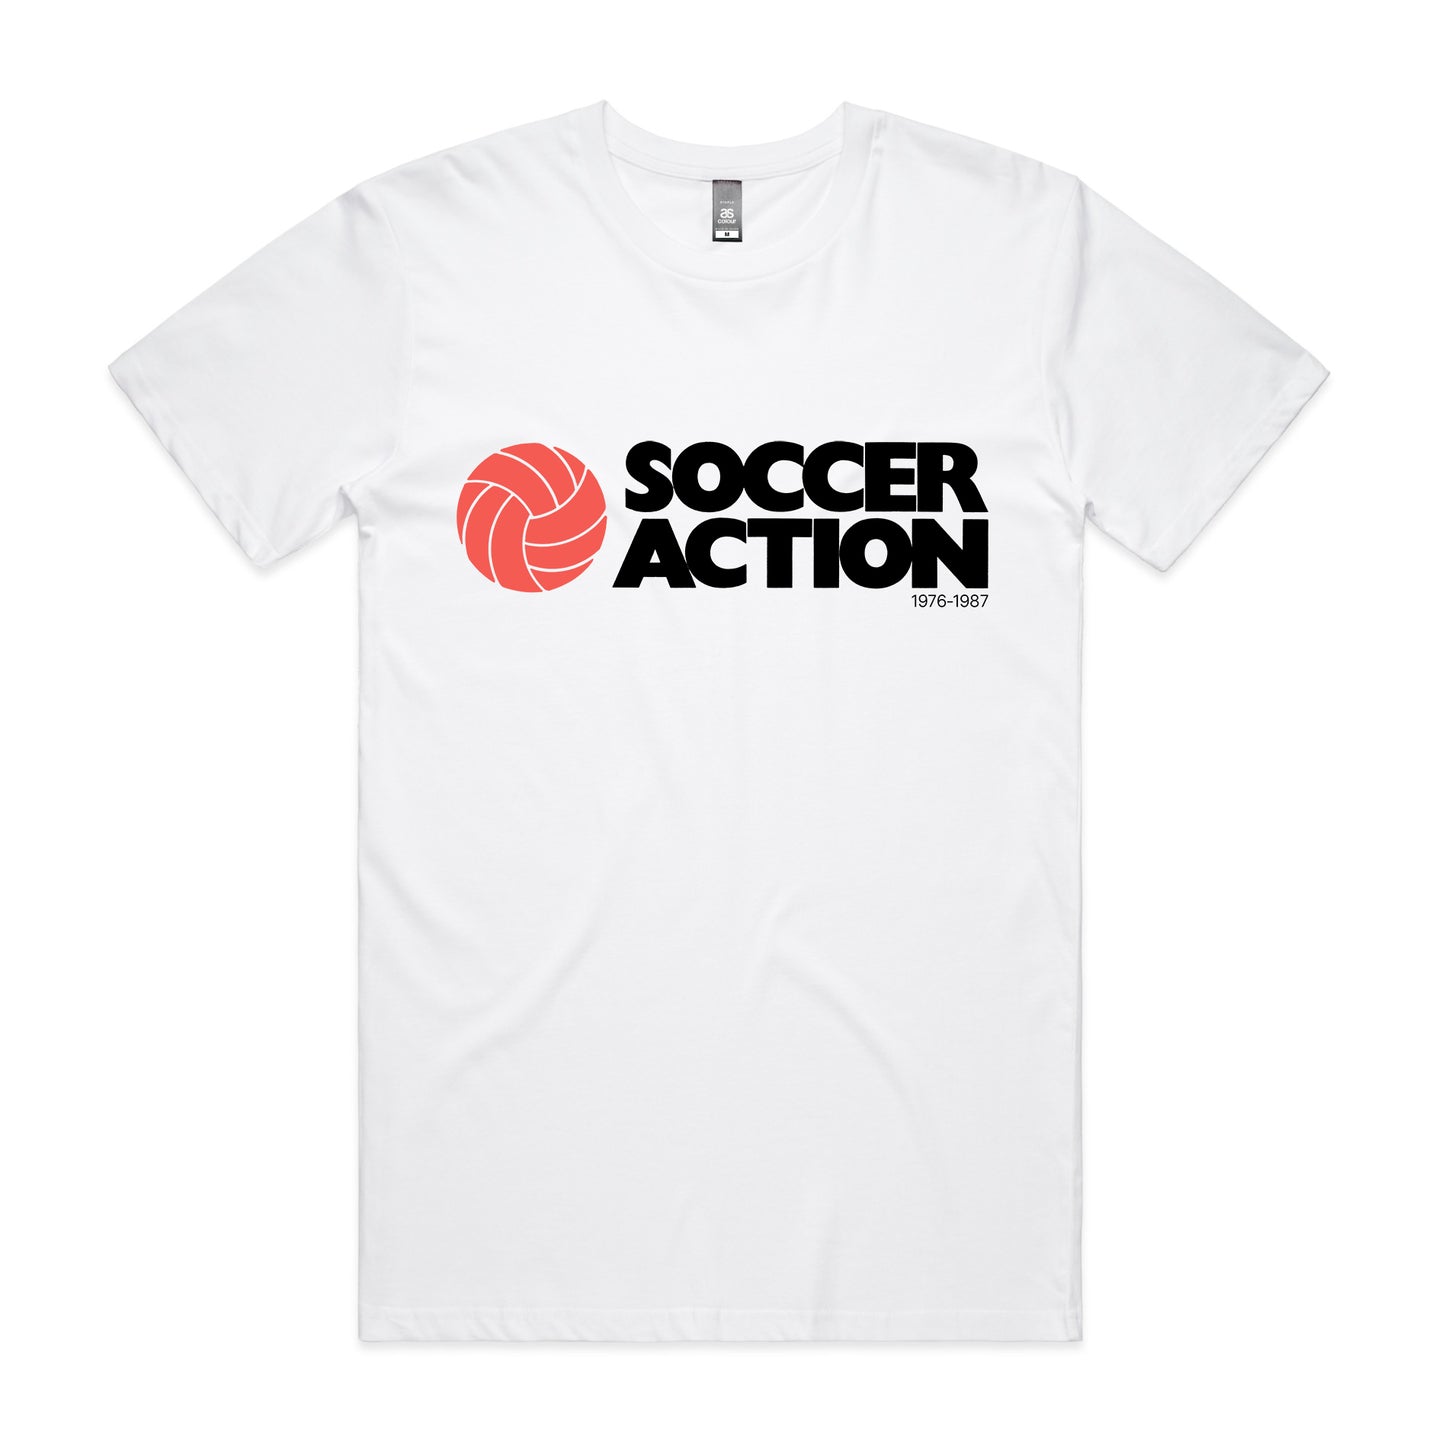 Soccer Action T-shirt